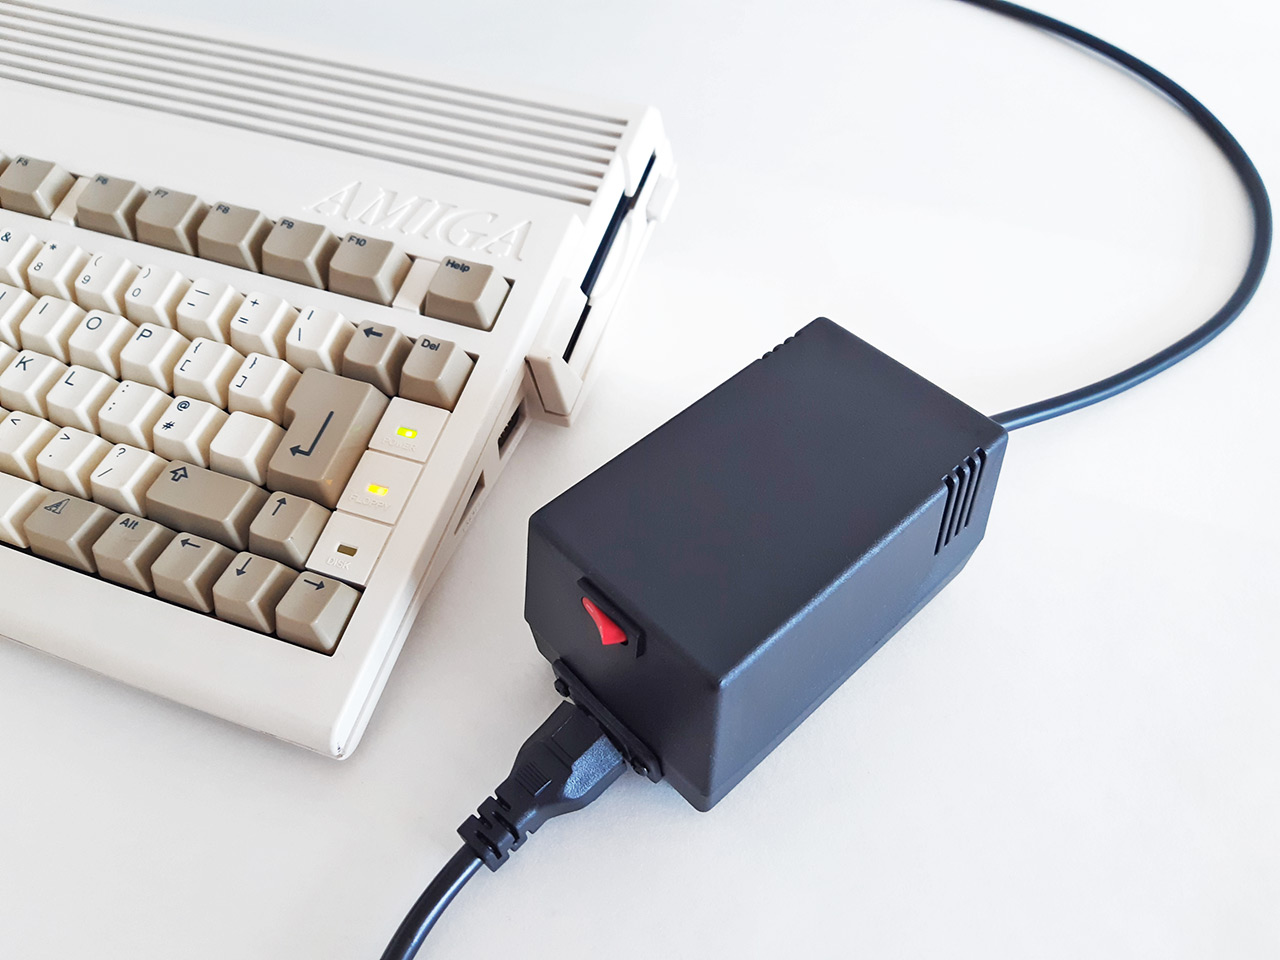 A600 running Amiga Duo PSU